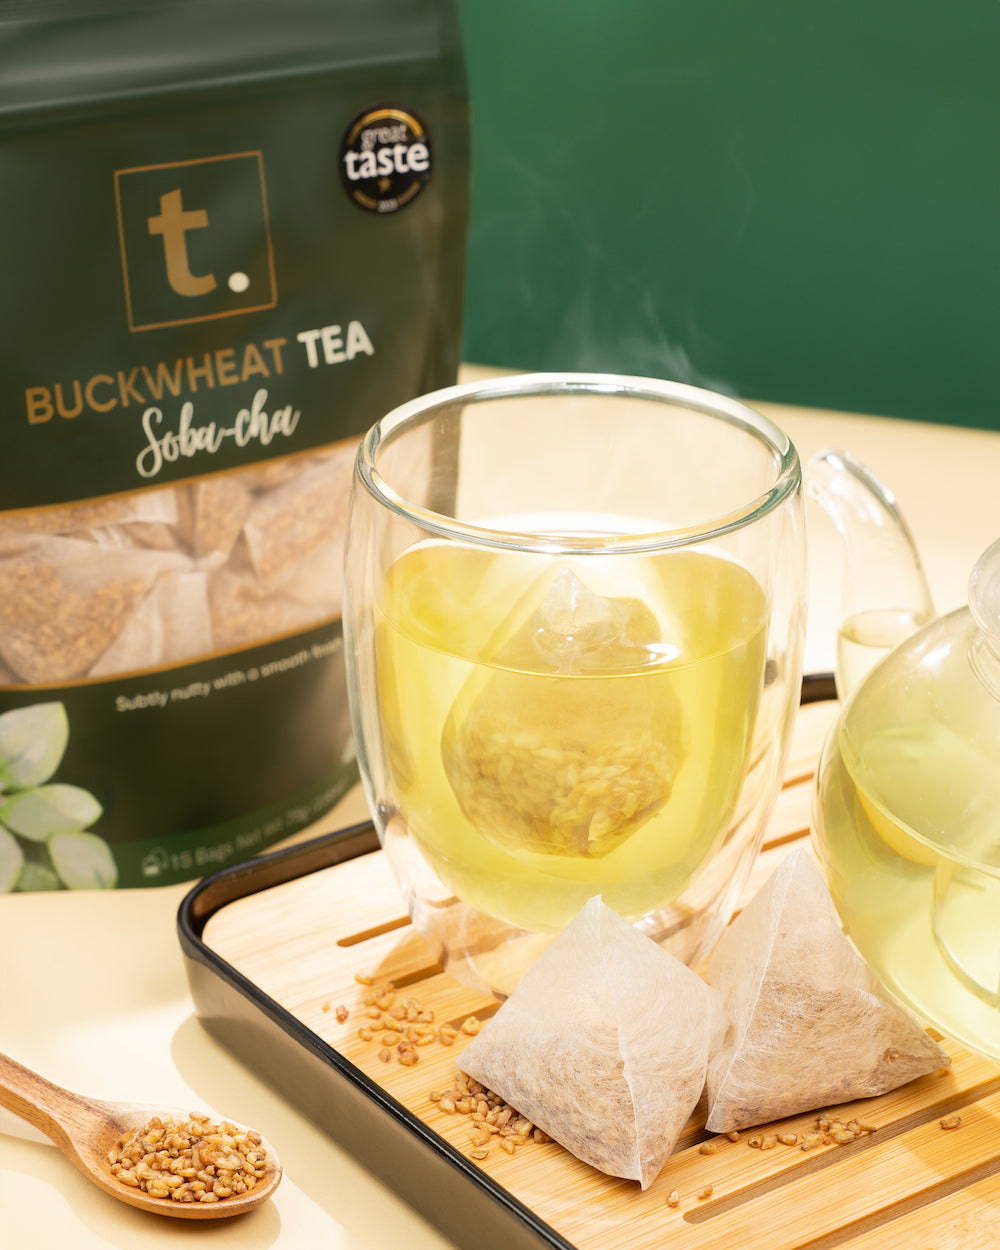 Roasted Buckwheat Tea (Soba-cha)